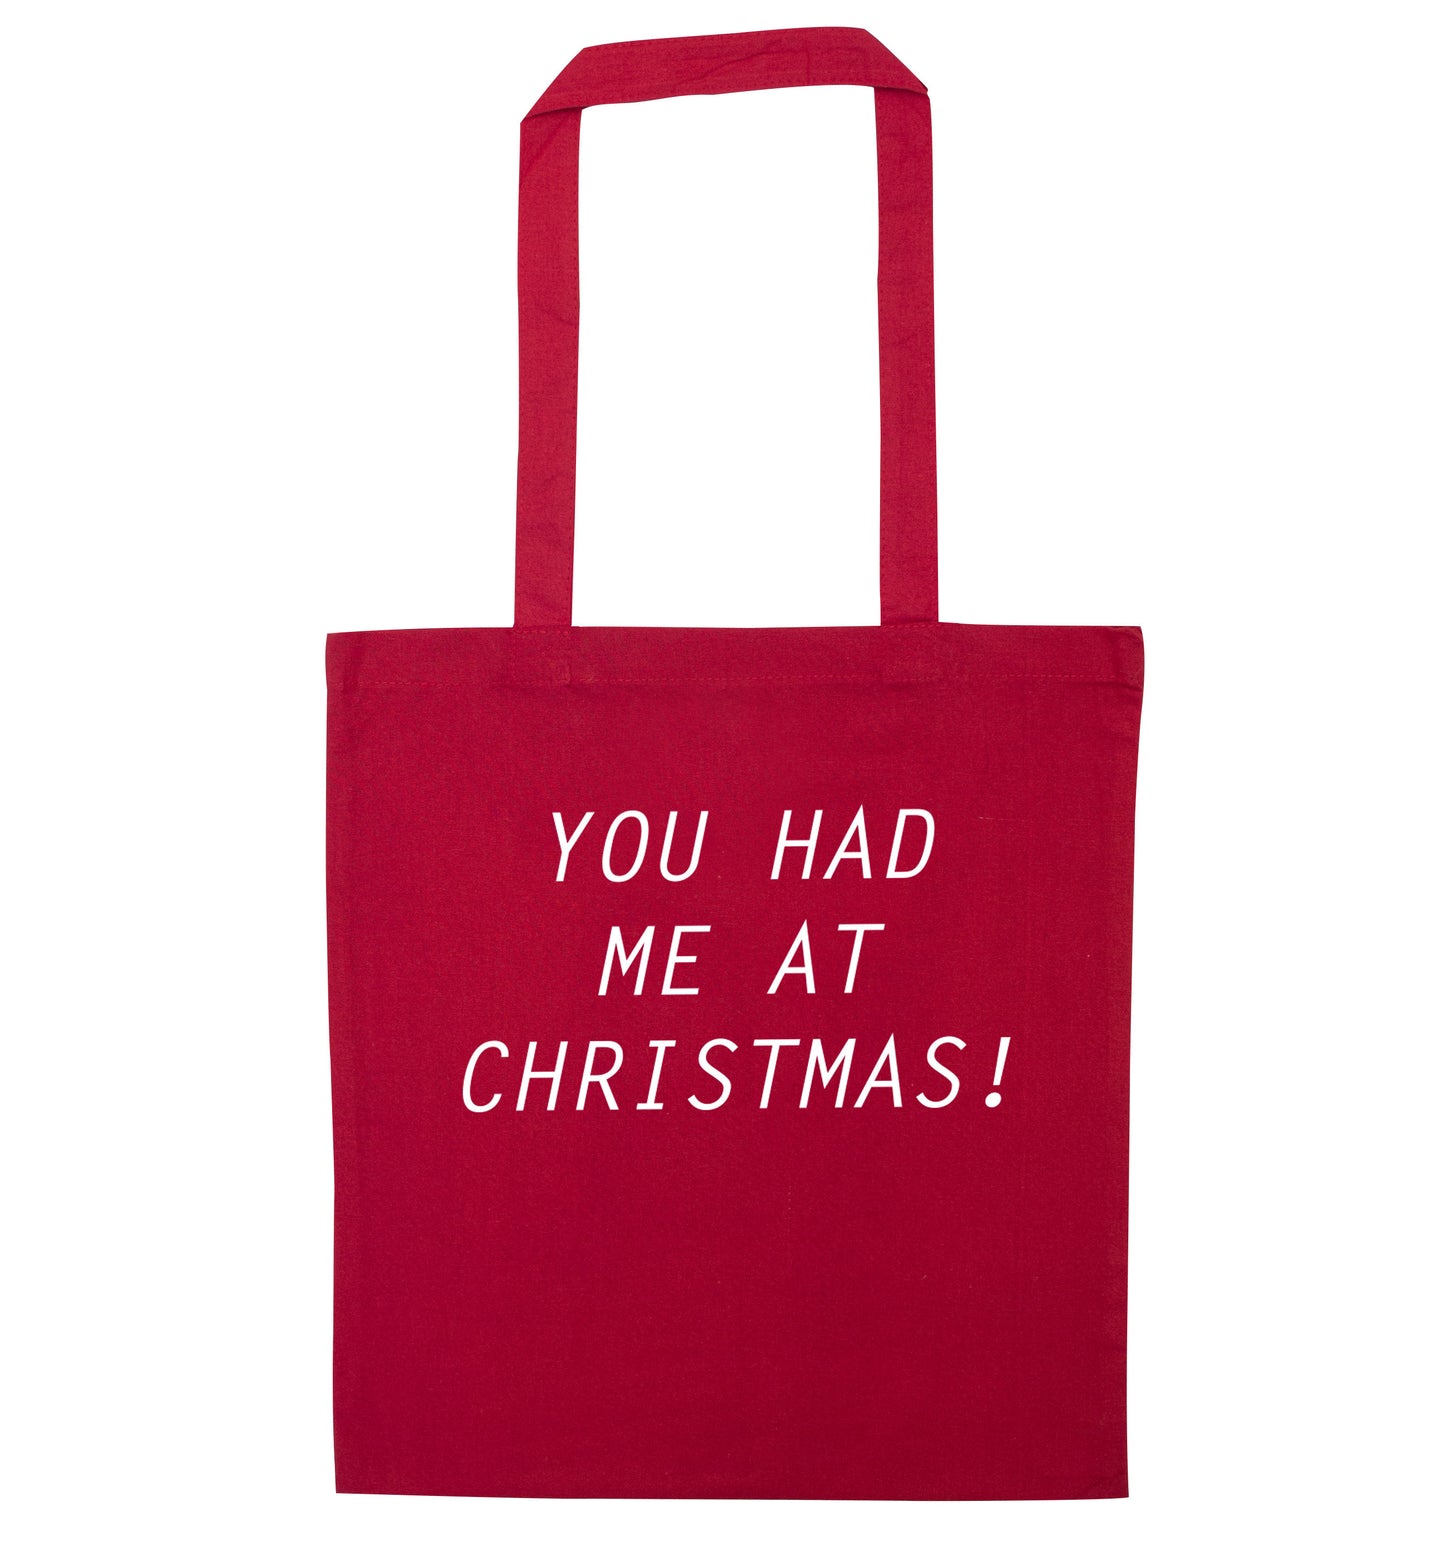 You had me at Christmas red tote bag